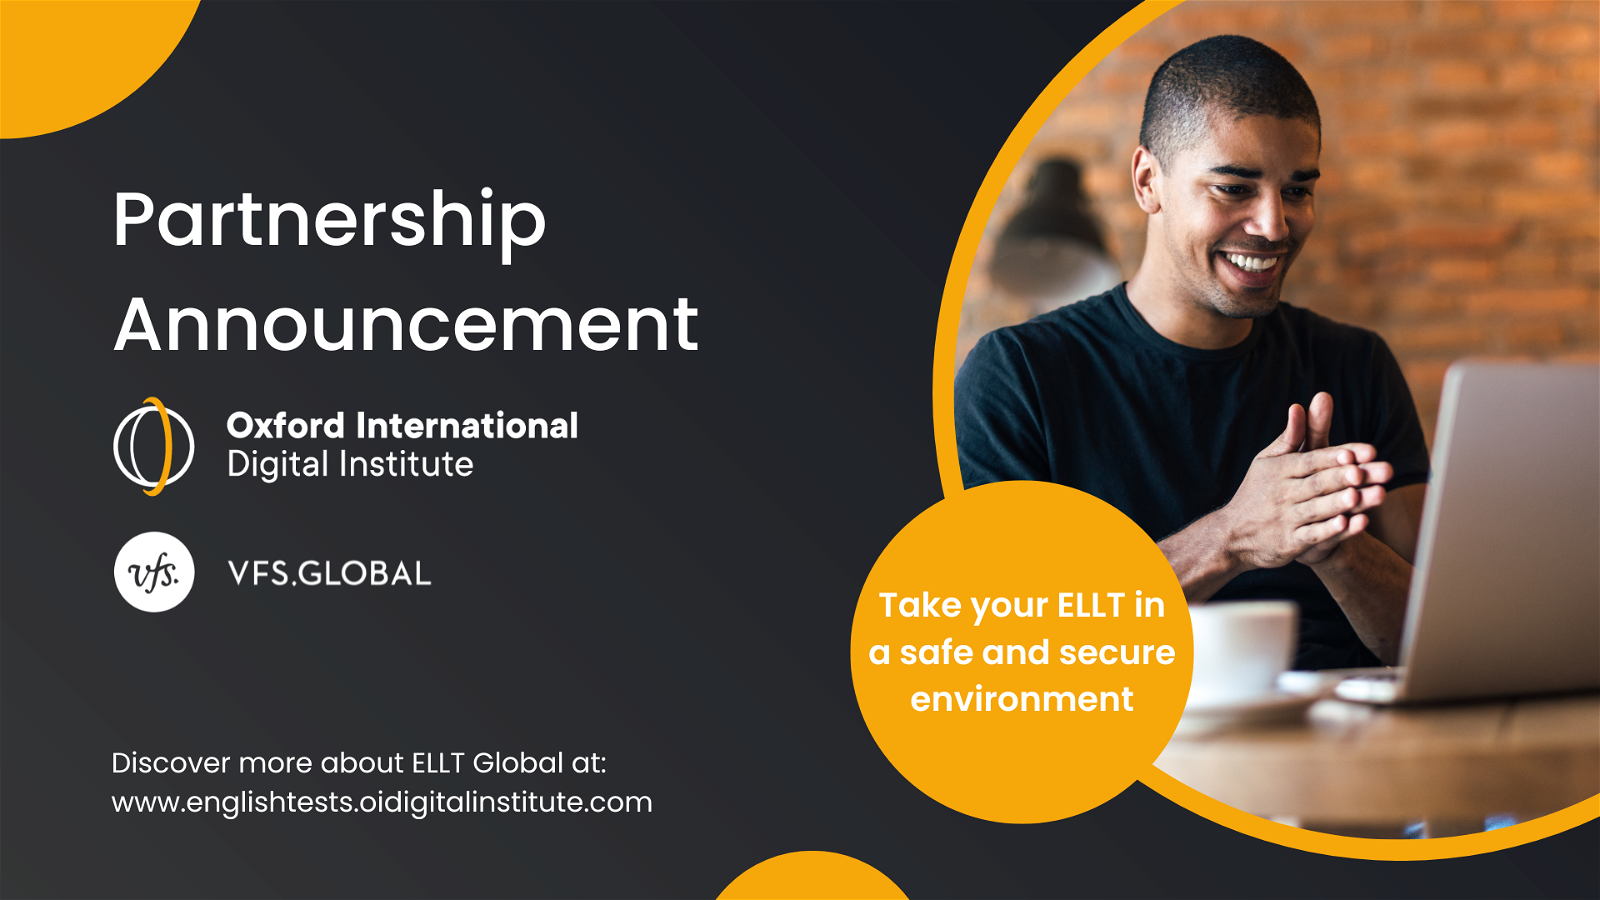 VFS Global partnership with ELLT Global